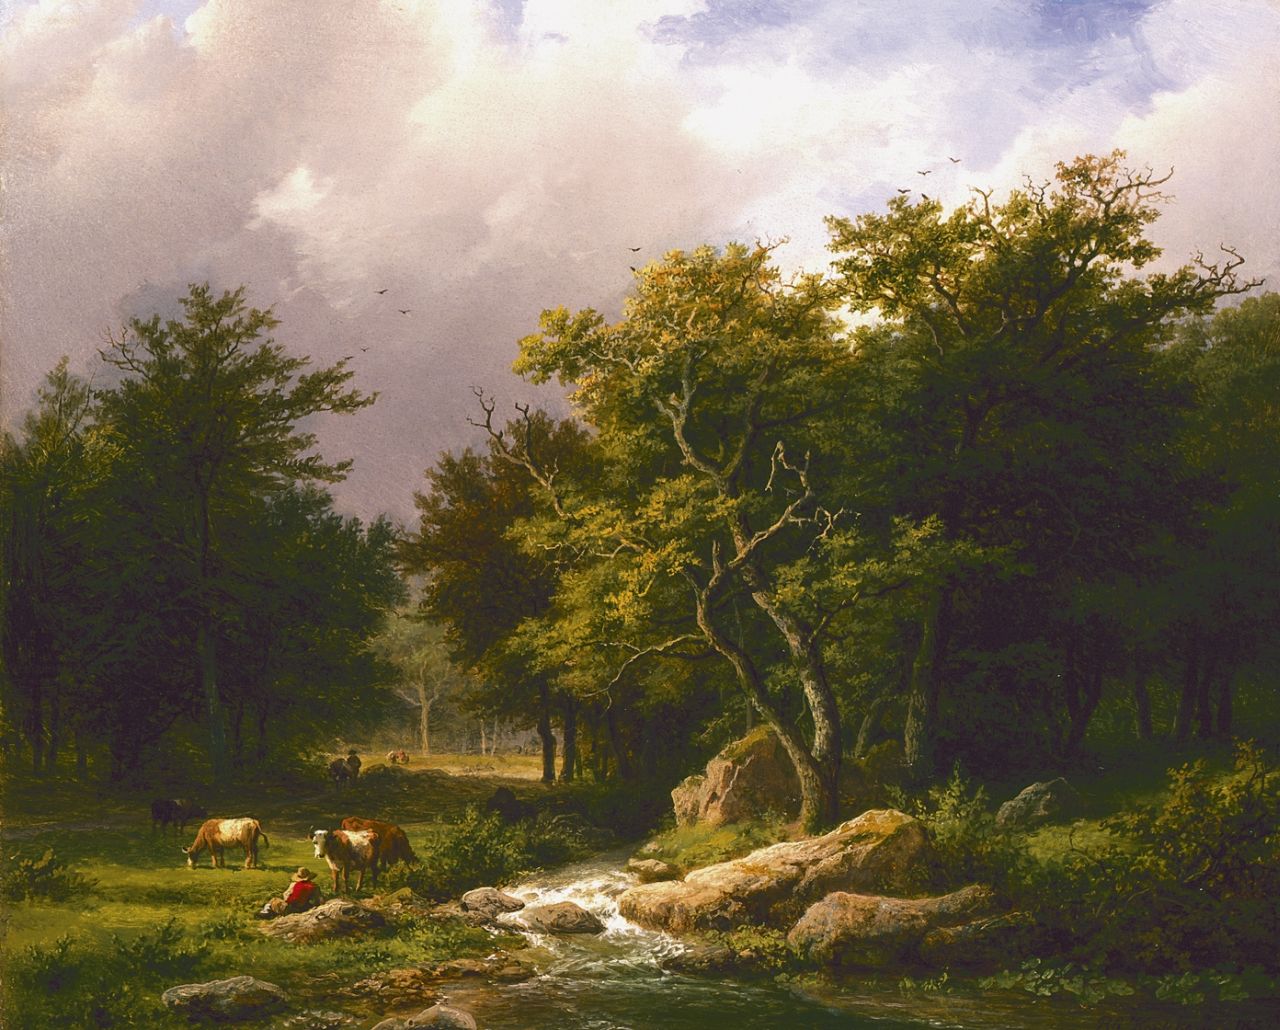 Koekkoek B.C.  | Barend Cornelis Koekkoek, Wooded landscape with cattle, oil on panel 25.3 x 31.2 cm, signed l.r.